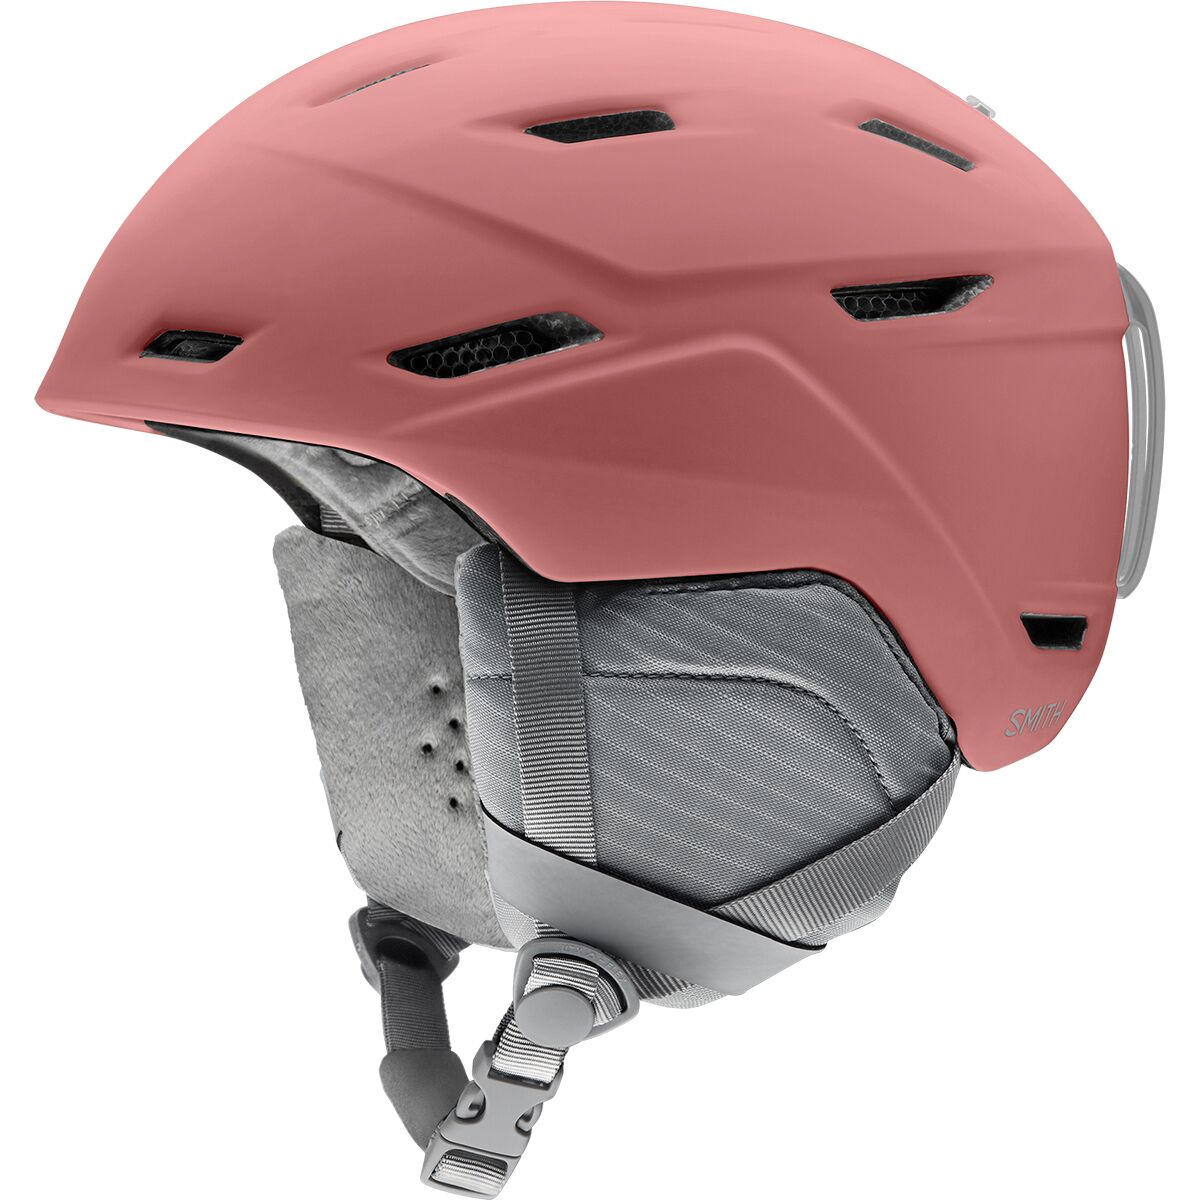 Photos - Protective Gear Set Smith Mirage Helmet - Women's 